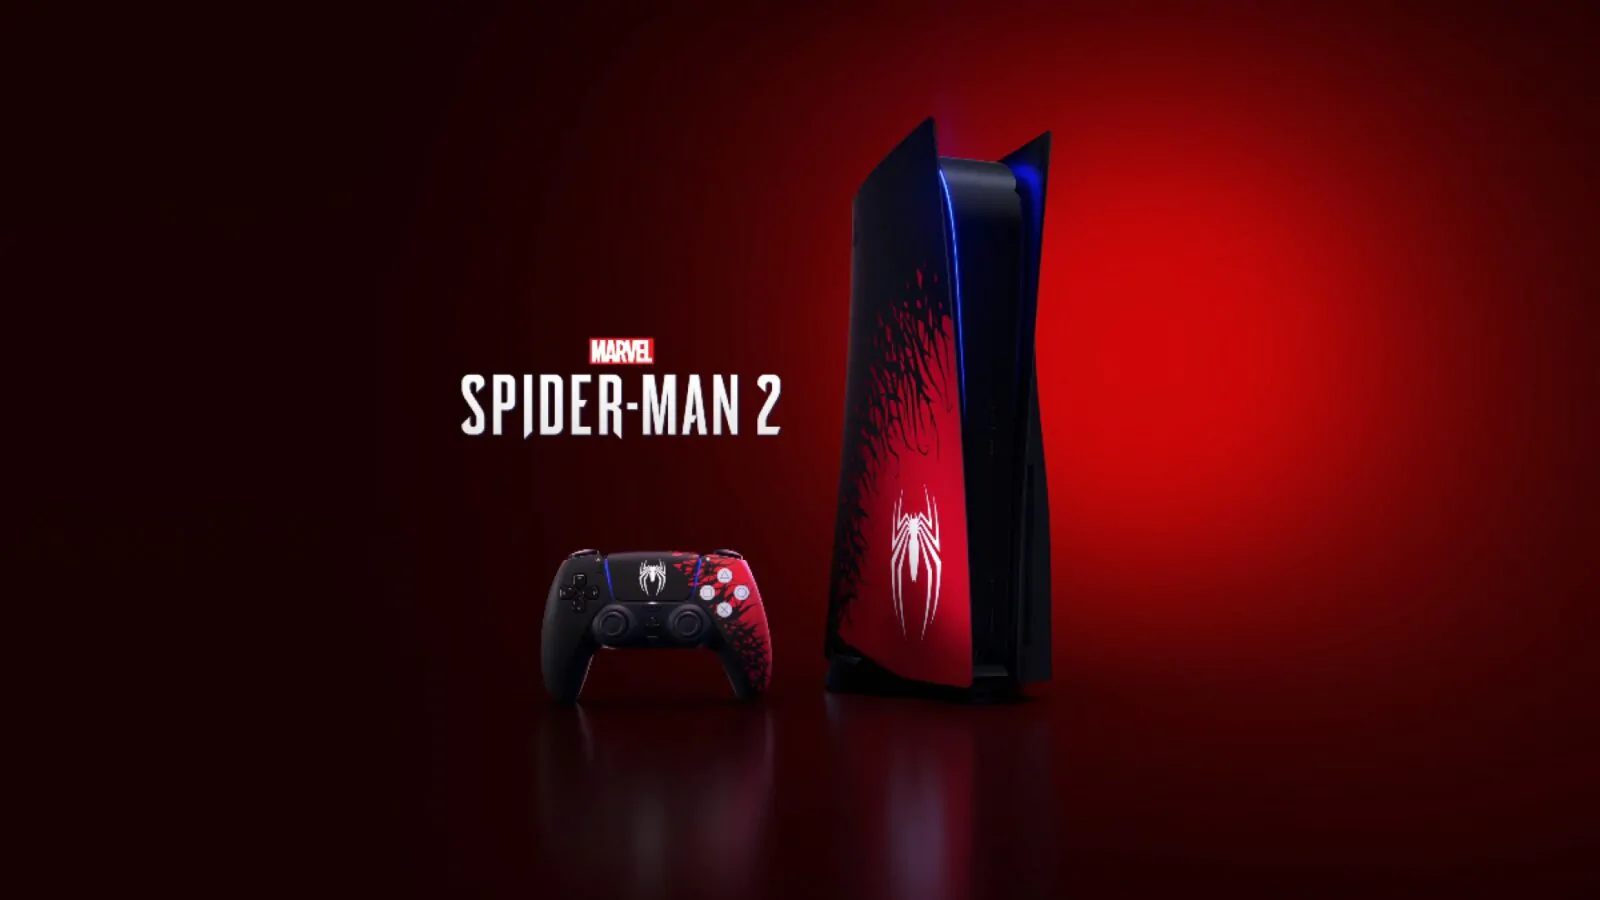 marvels spider man 2 limited edition ps5 and dualsense | Marvel’s Spider-Man 2 | เปิดตัว Marvel’s Spider-Man 2 Limited Edition PS5 สั่งซื้อล่วงหน้านได้แล้ววันนี้